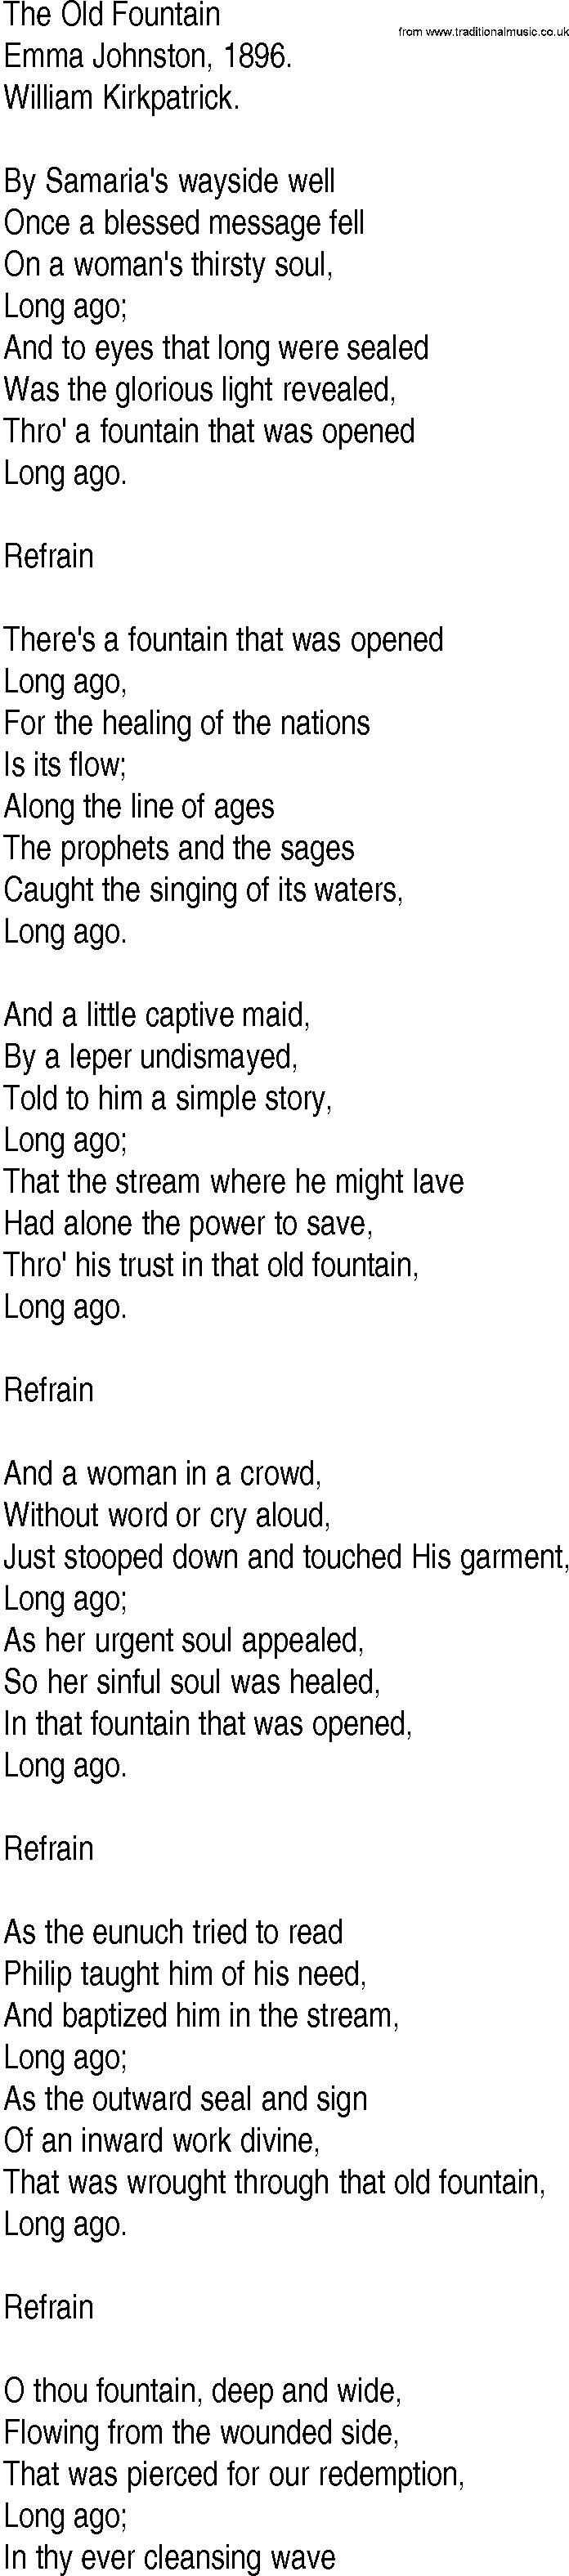 Hymn and Gospel Song: The Old Fountain by Emma Johnston lyrics